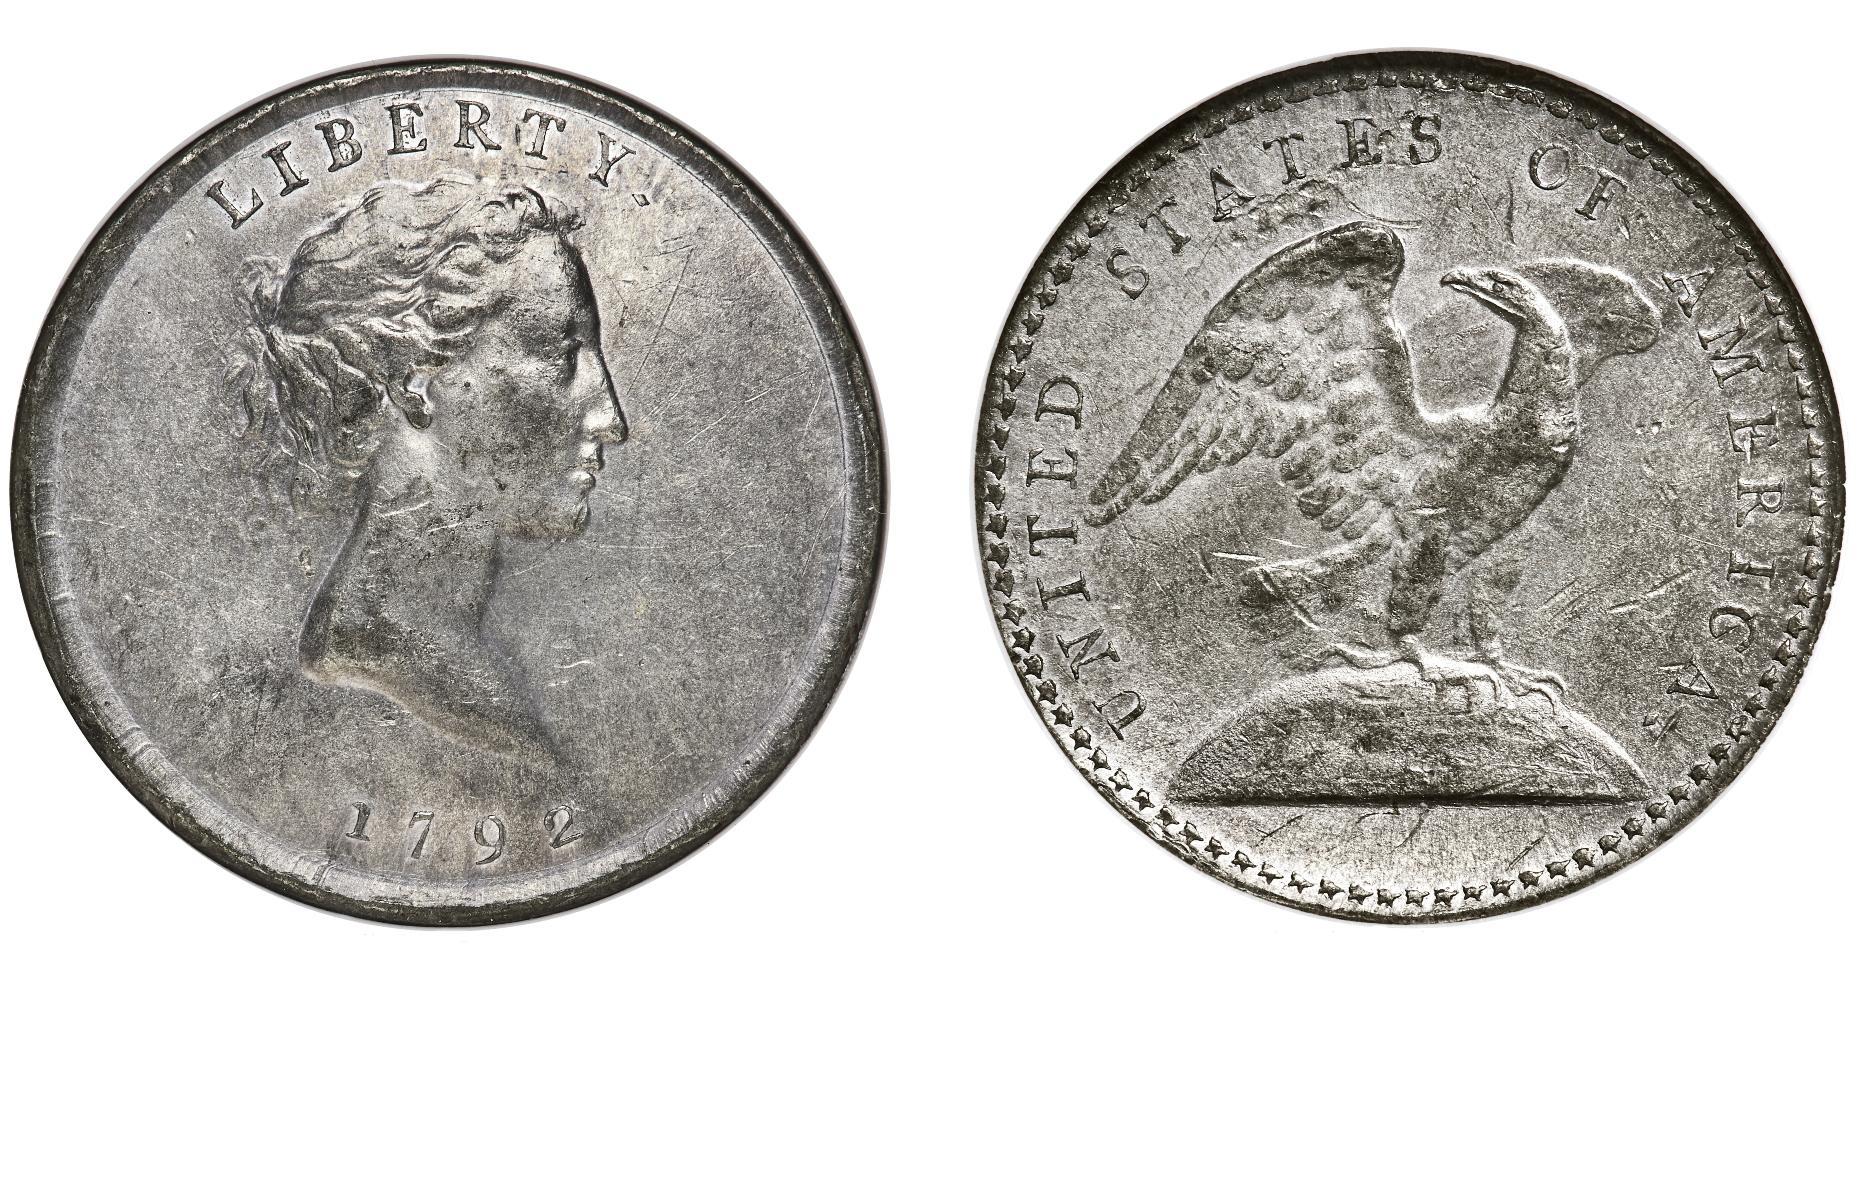 1792 Judd 13 white metal quarter: $1.26 million